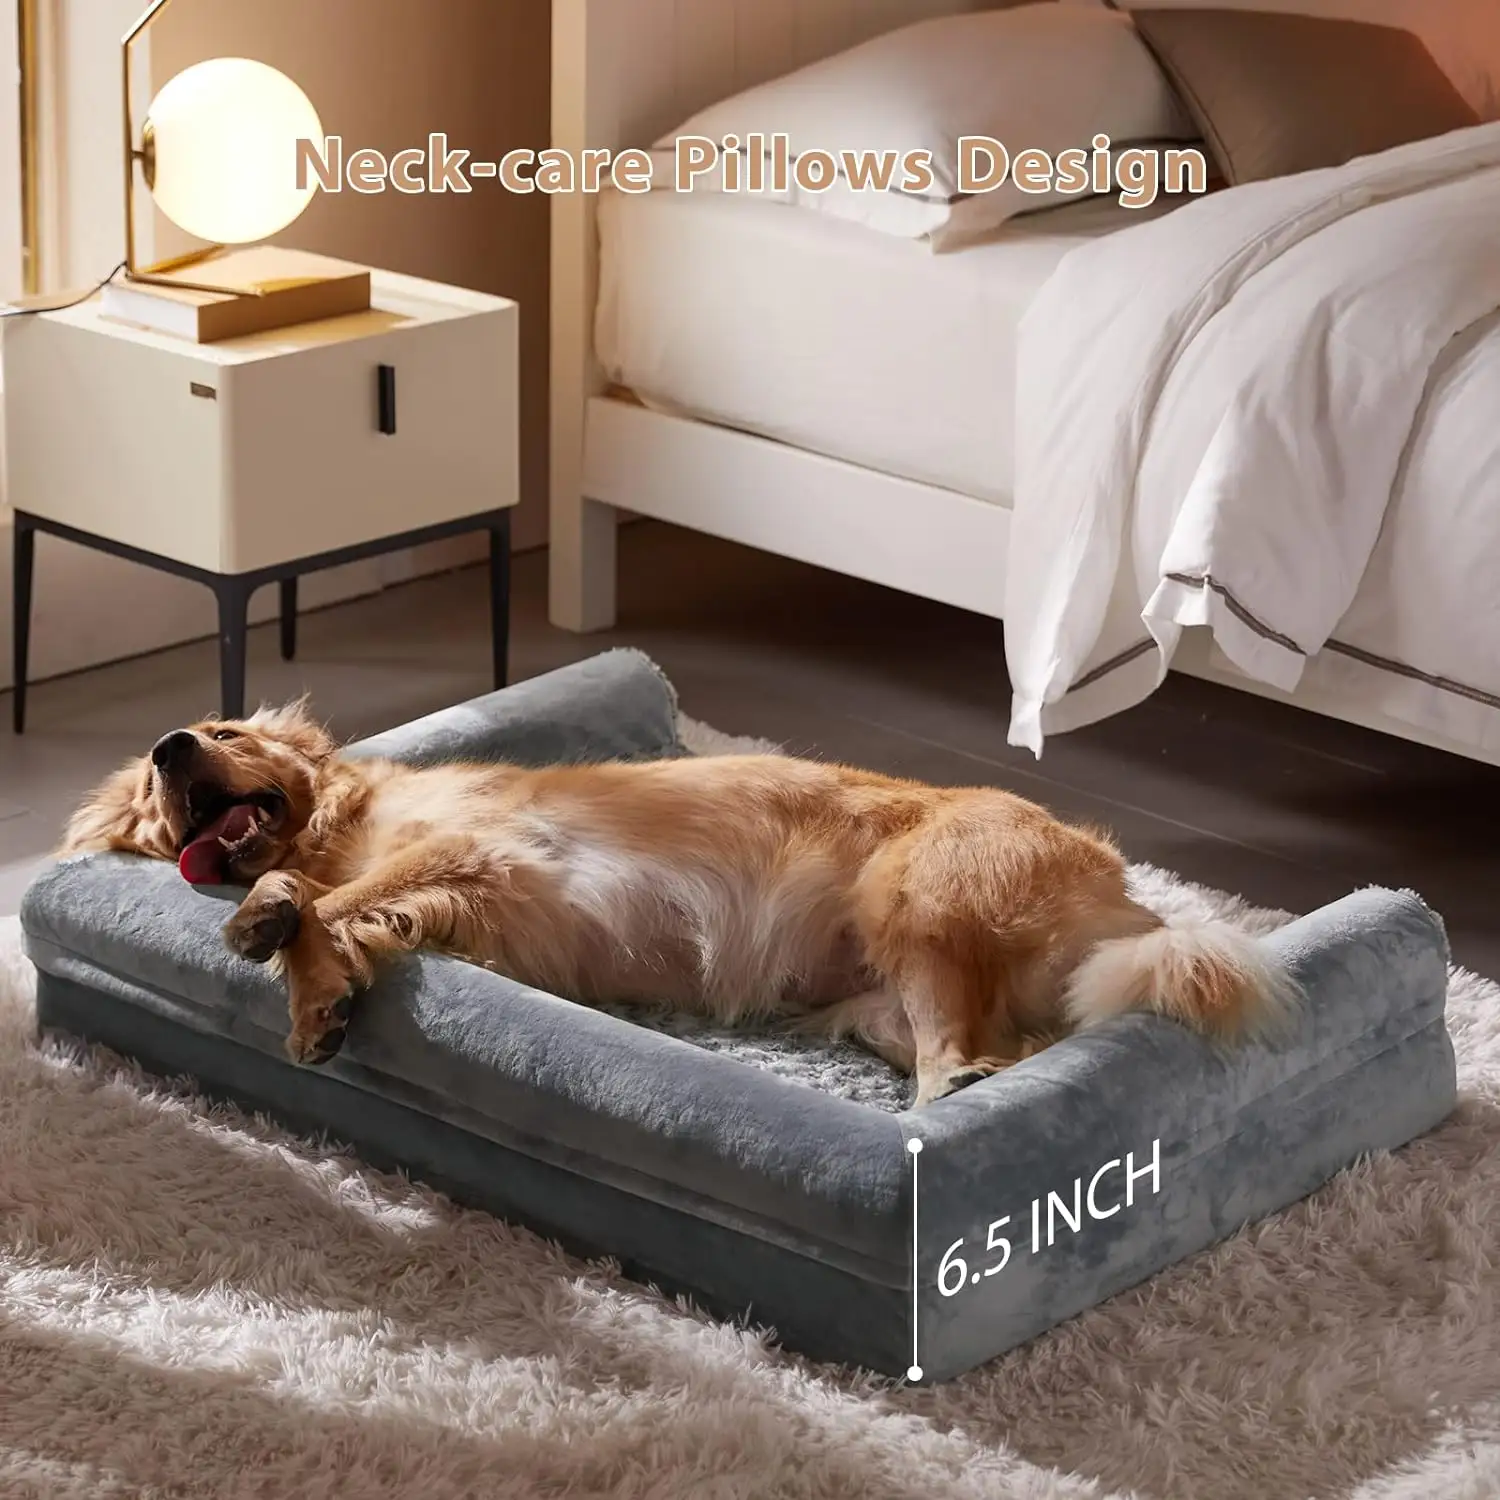 Tempat tidur anjing dengan bantal, tempat tidur anjing ukuran besar dengan busa memori